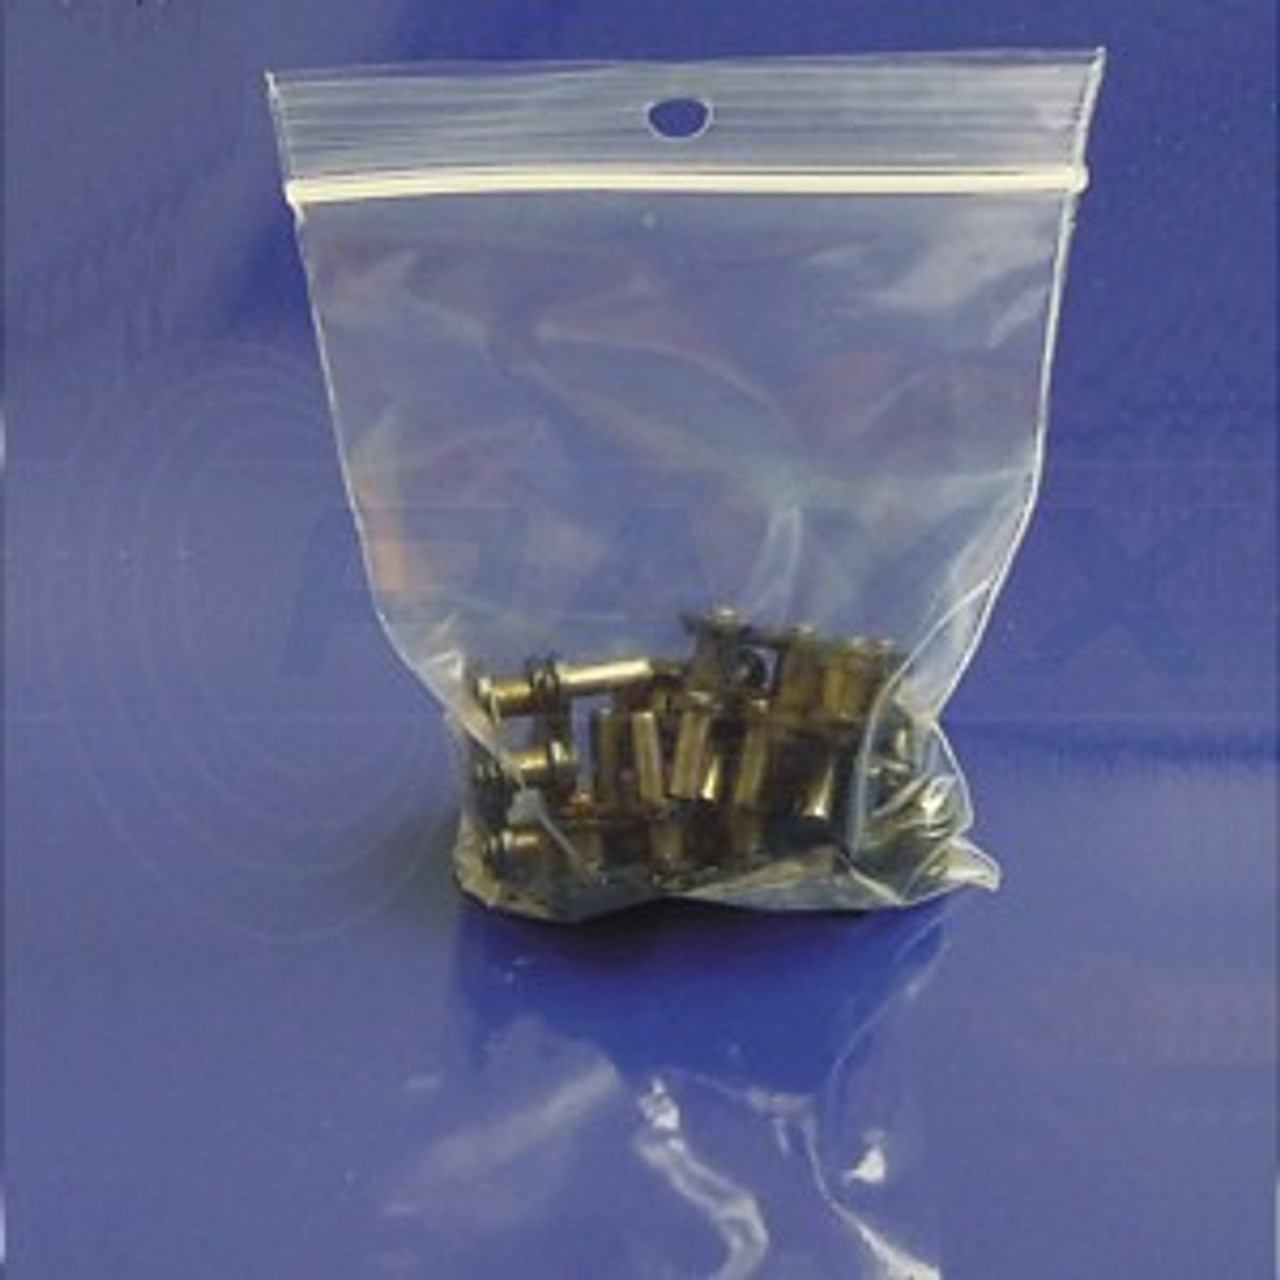 7" x 10" Re-closable Zip Lock Bags 2mil price per 100